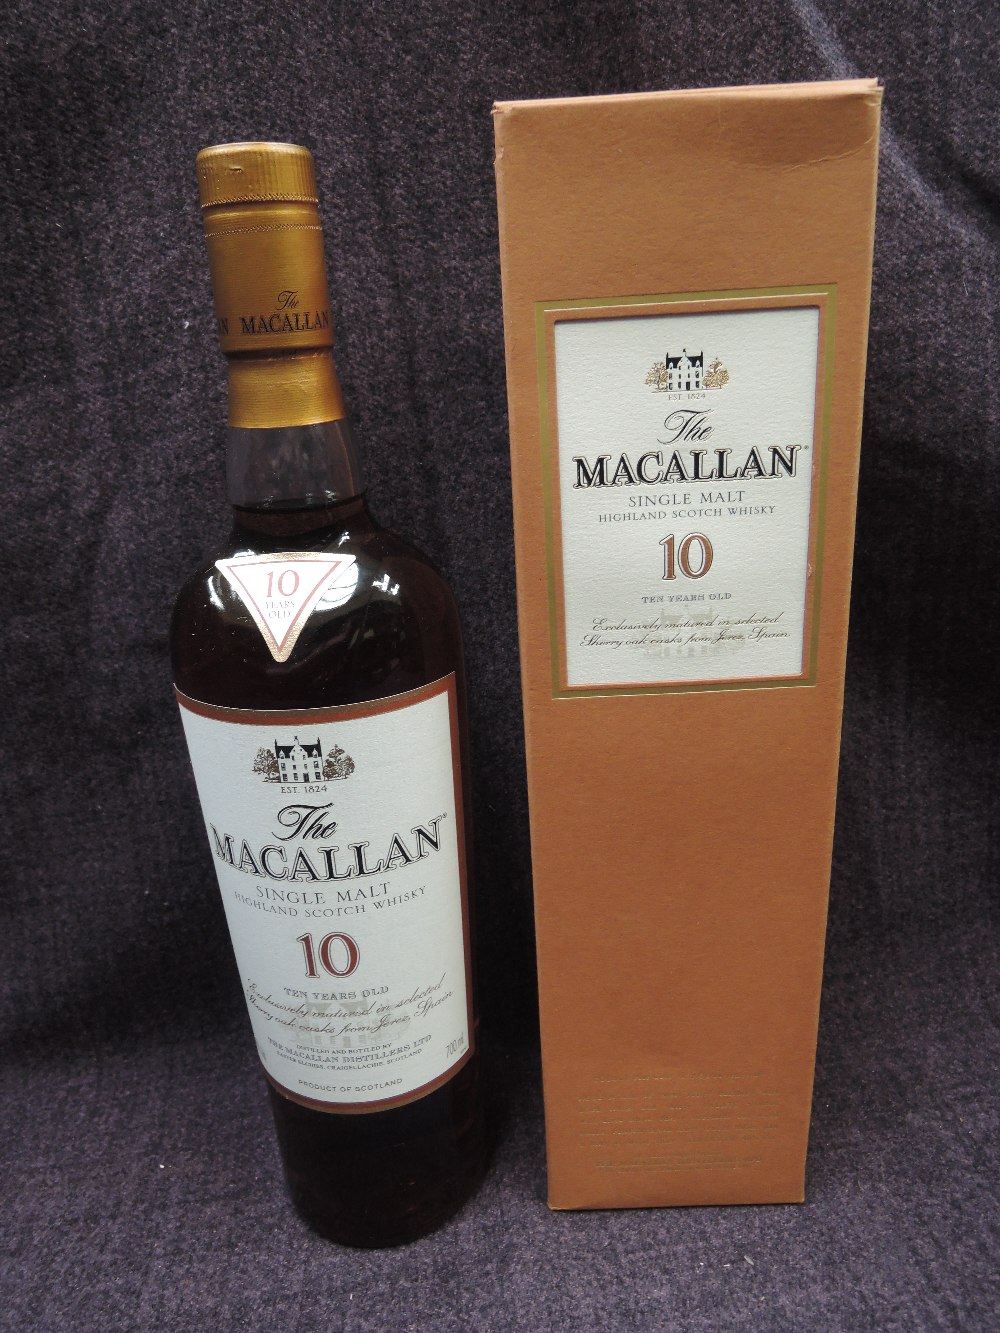 A bottle of the Macallan single malt highland malt whisky, 10 year old